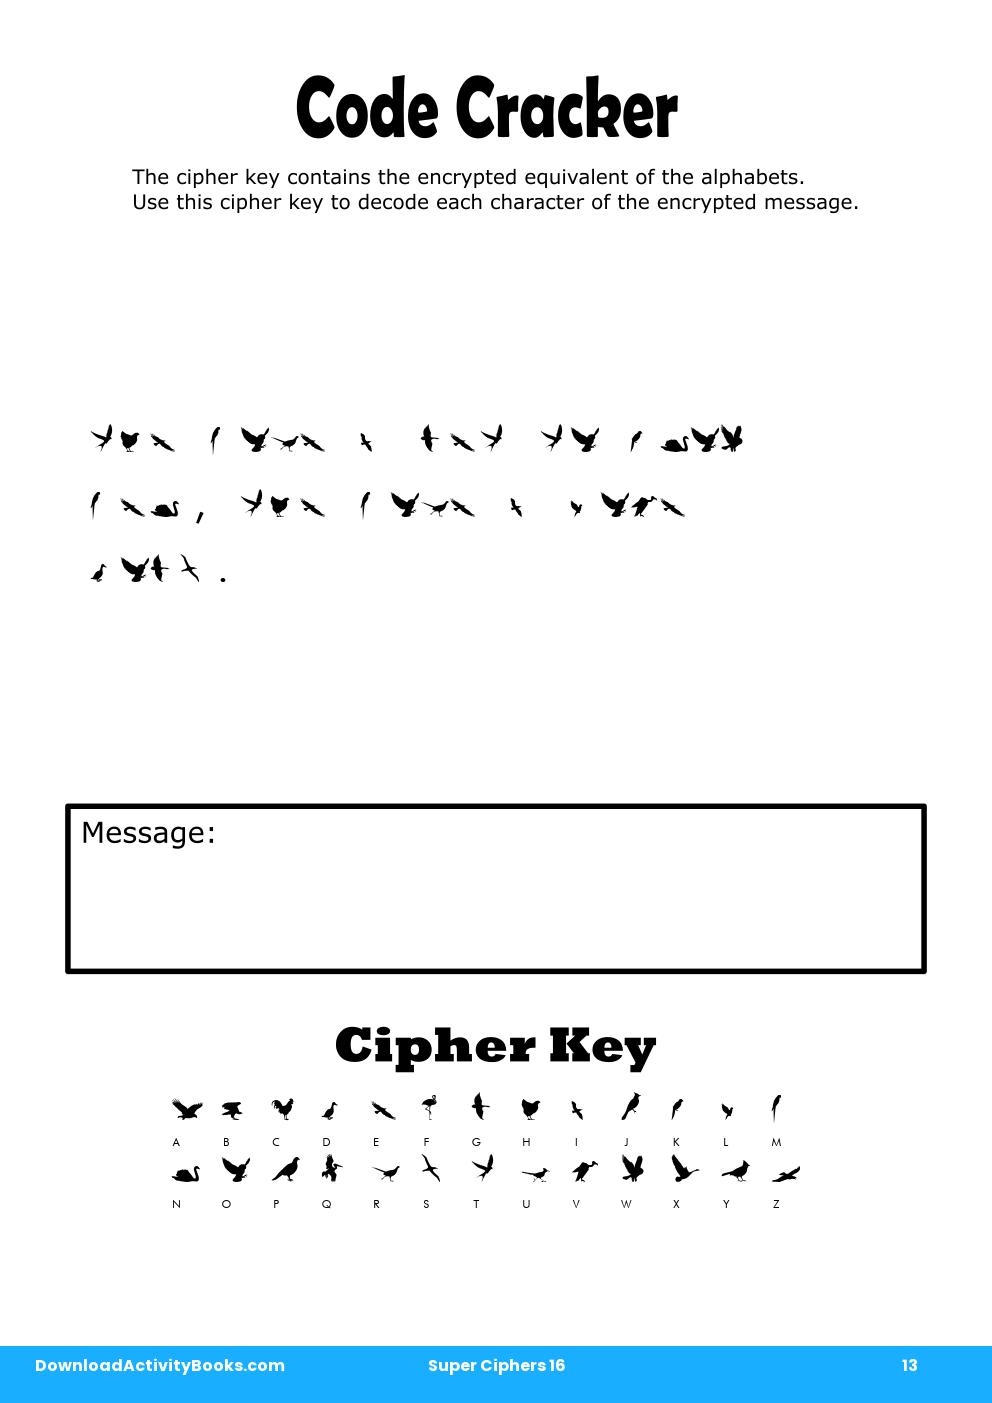 Code Cracker in Super Ciphers 16